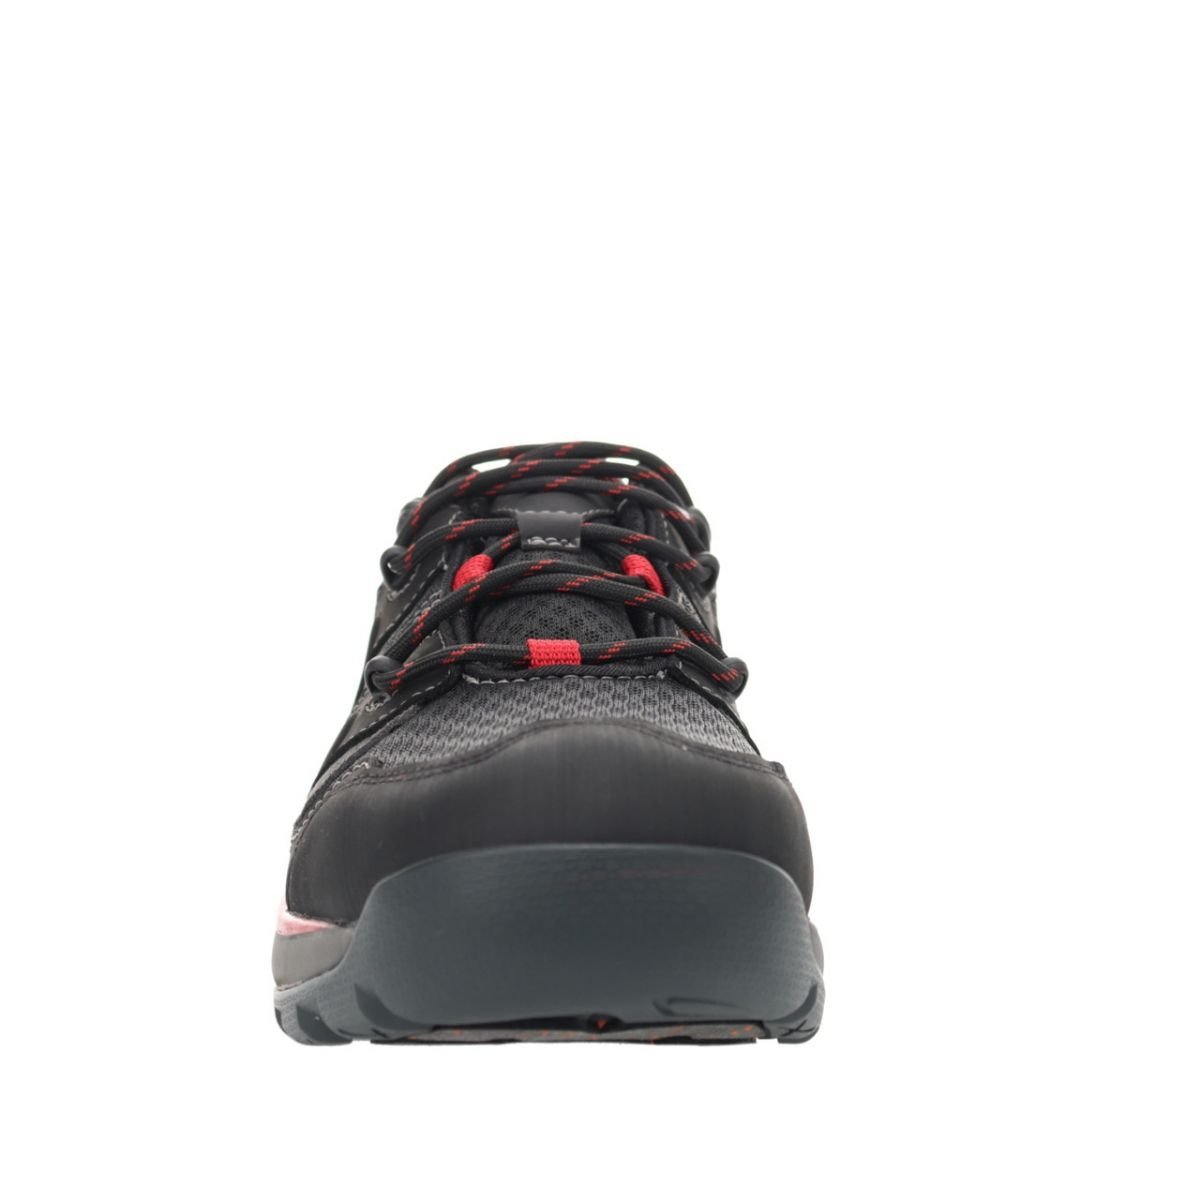 Propet Men's Vercors Hiking Shoe Black/Red - MOA002SBRD BLACK/RED - BLACK/RED, 15 X-Wide